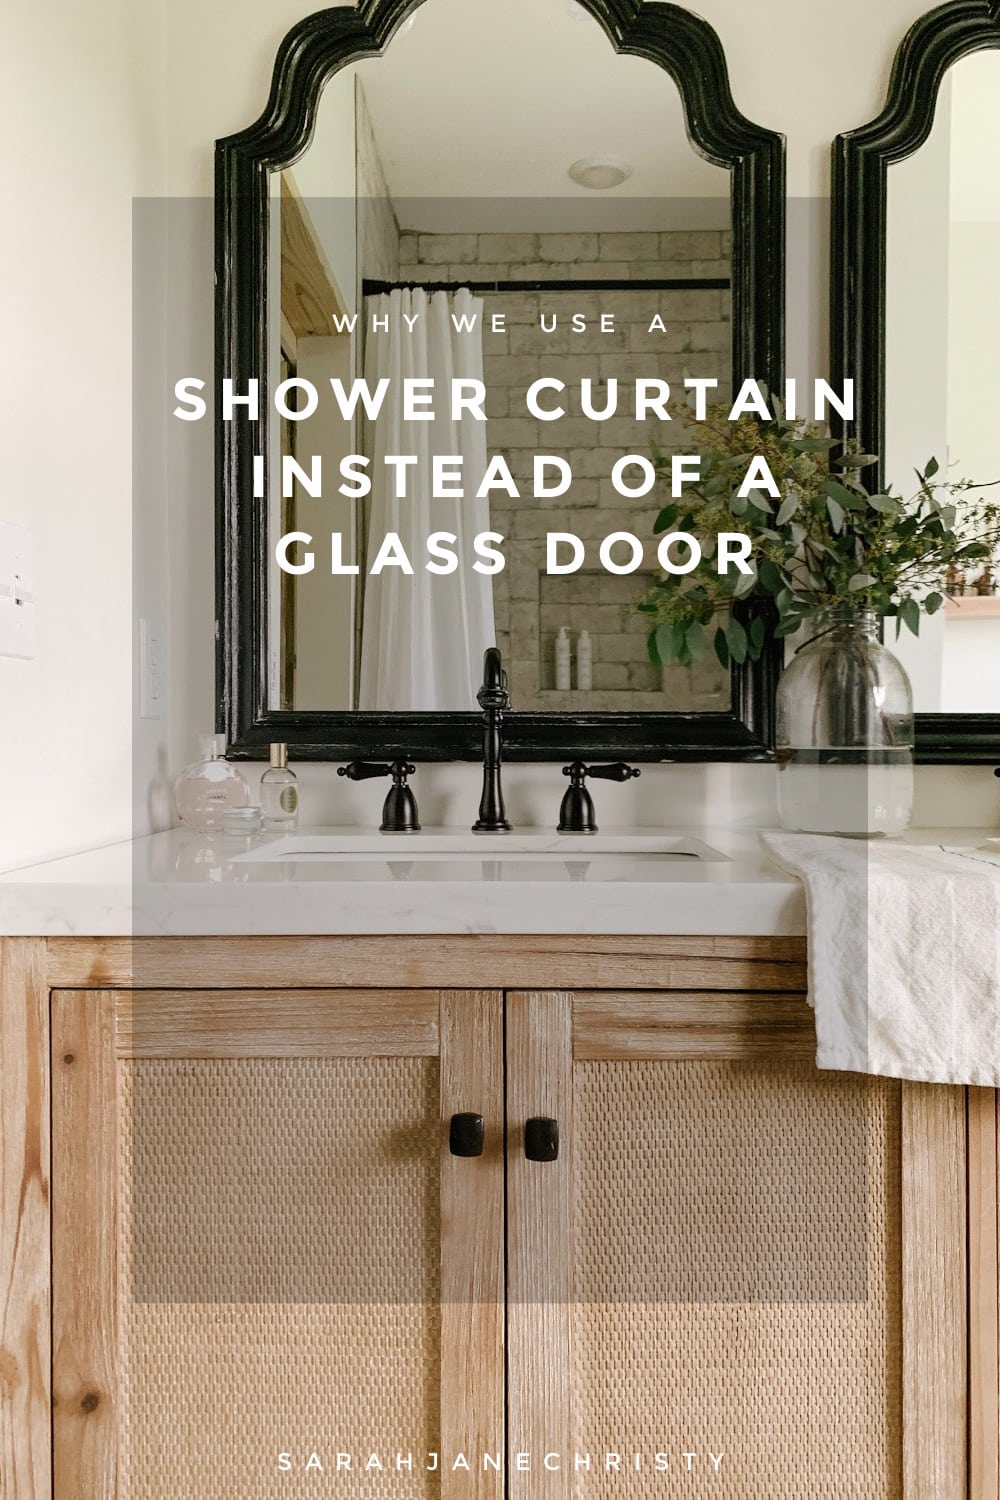 Shower Curtain Instead Of A Glass Door, Shower Stall With Curtain Instead Of Door